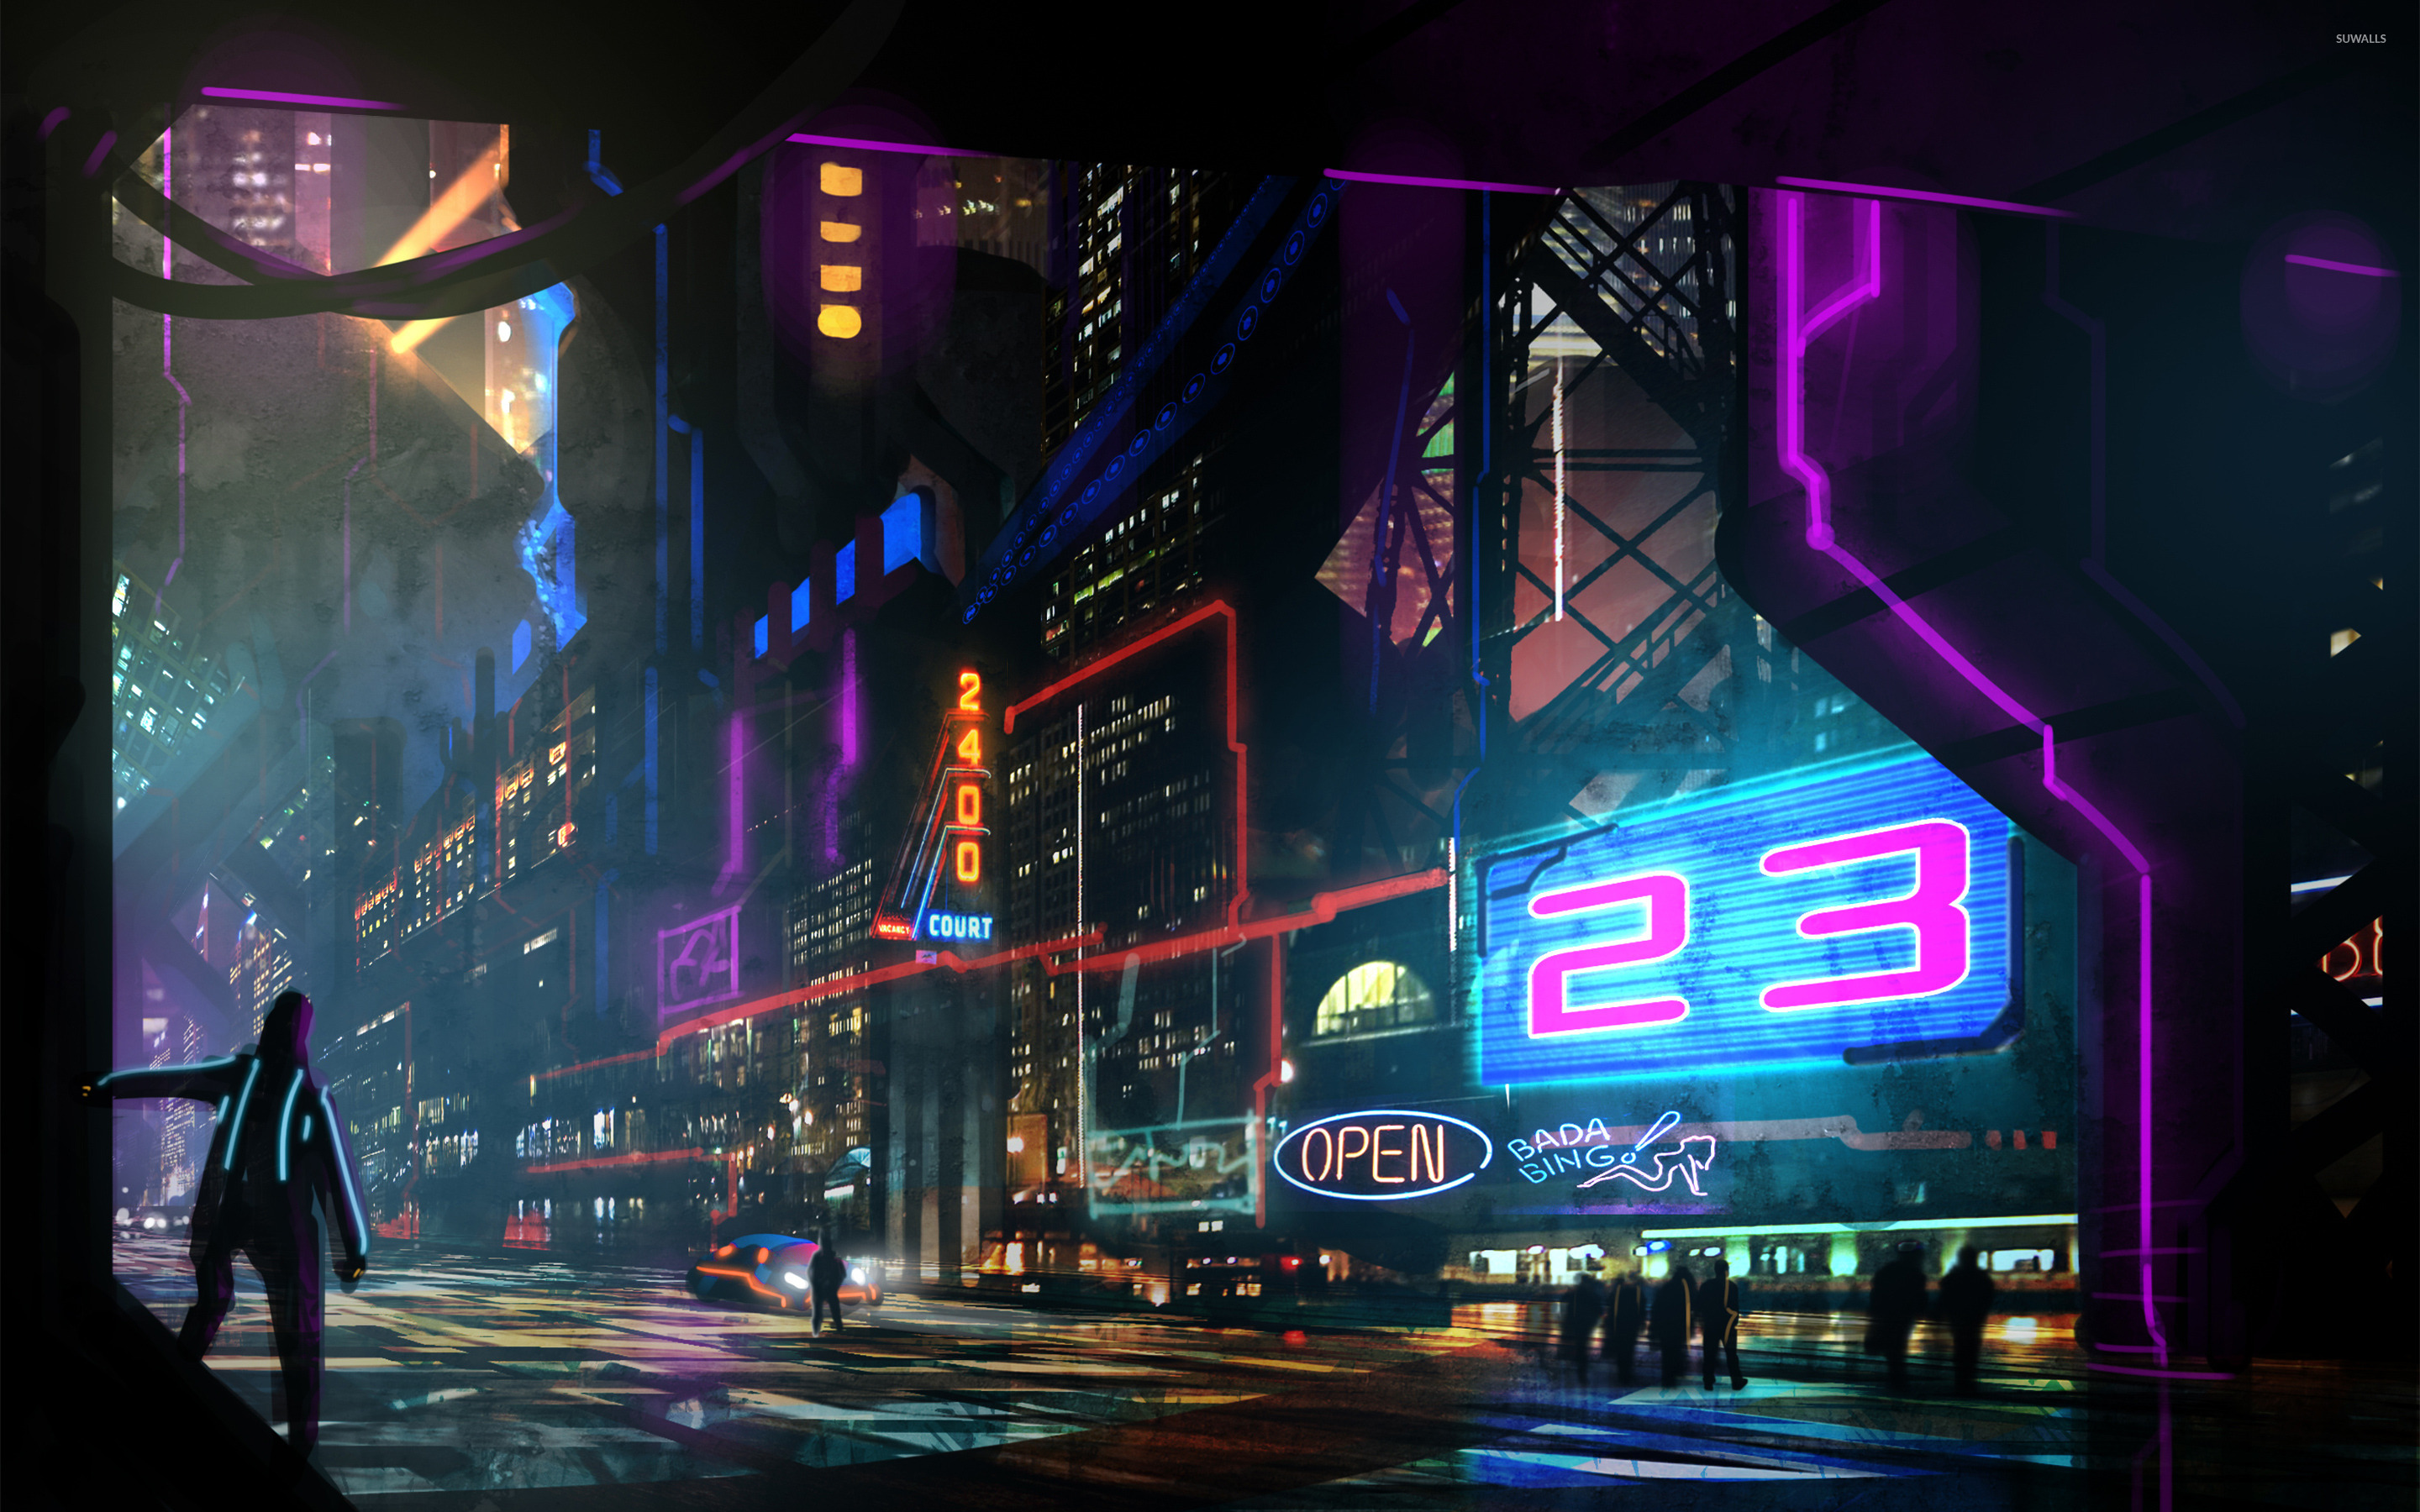 Neon Night City Wallpapers